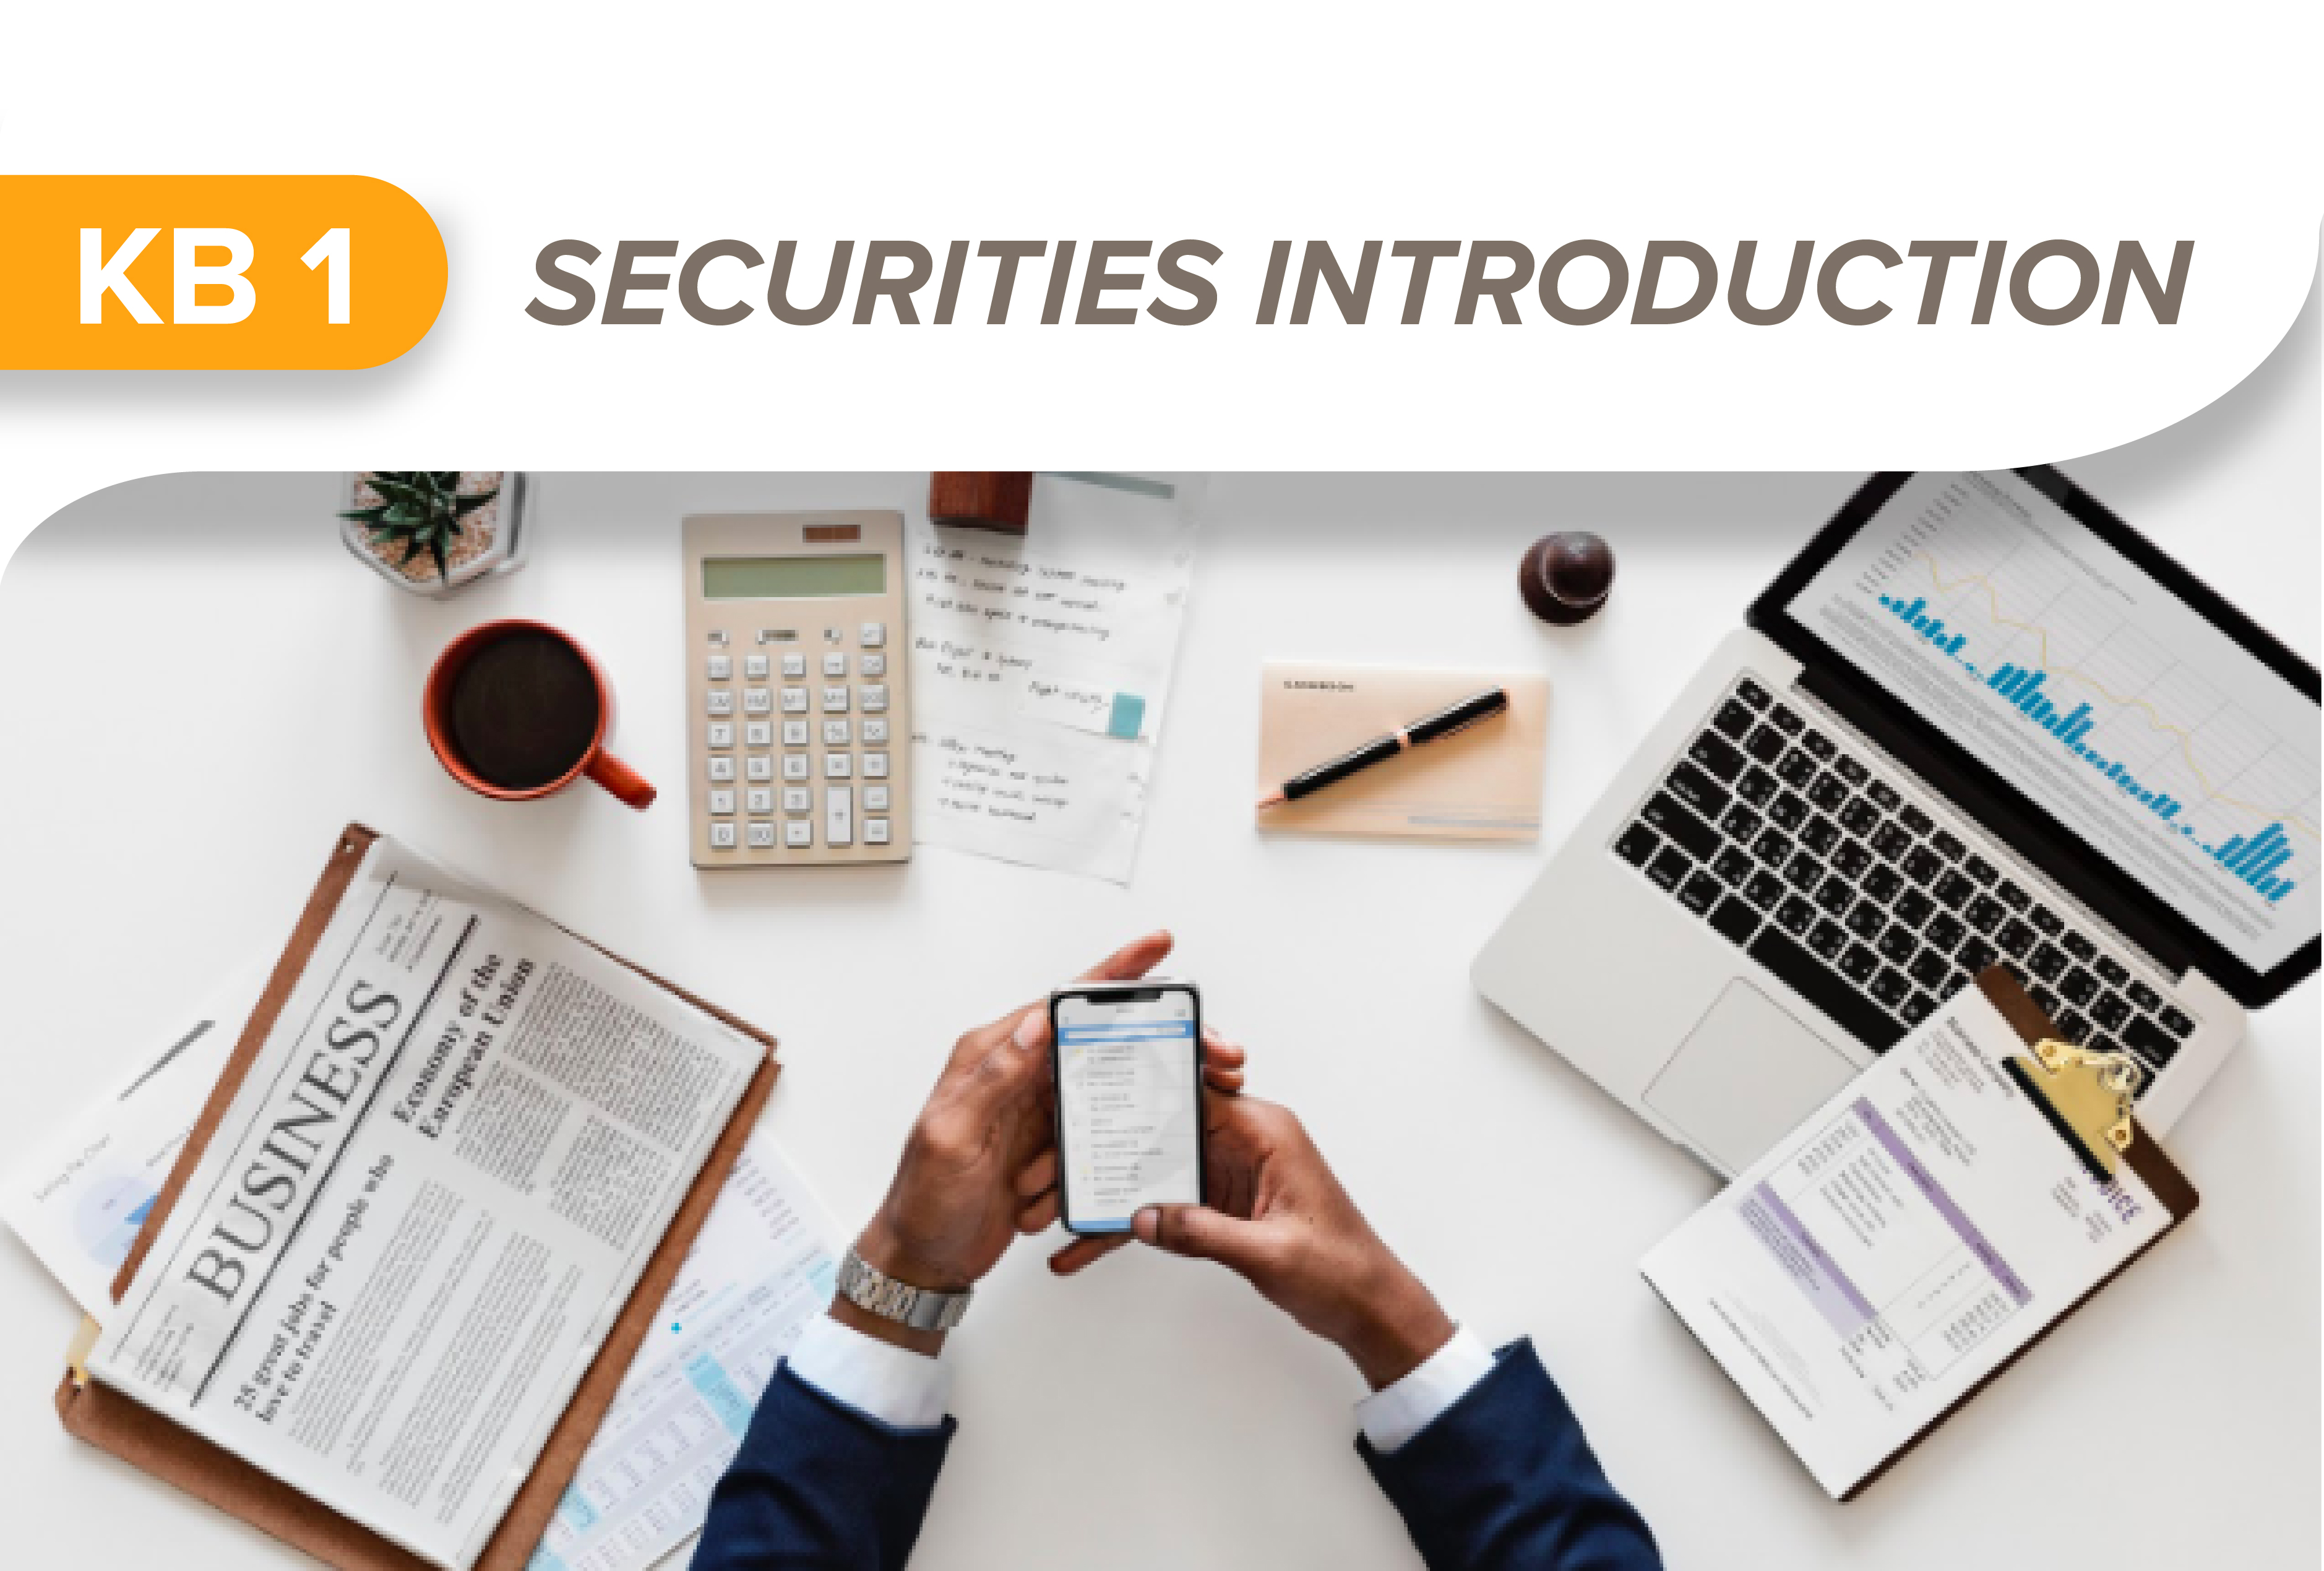 Securities introduction